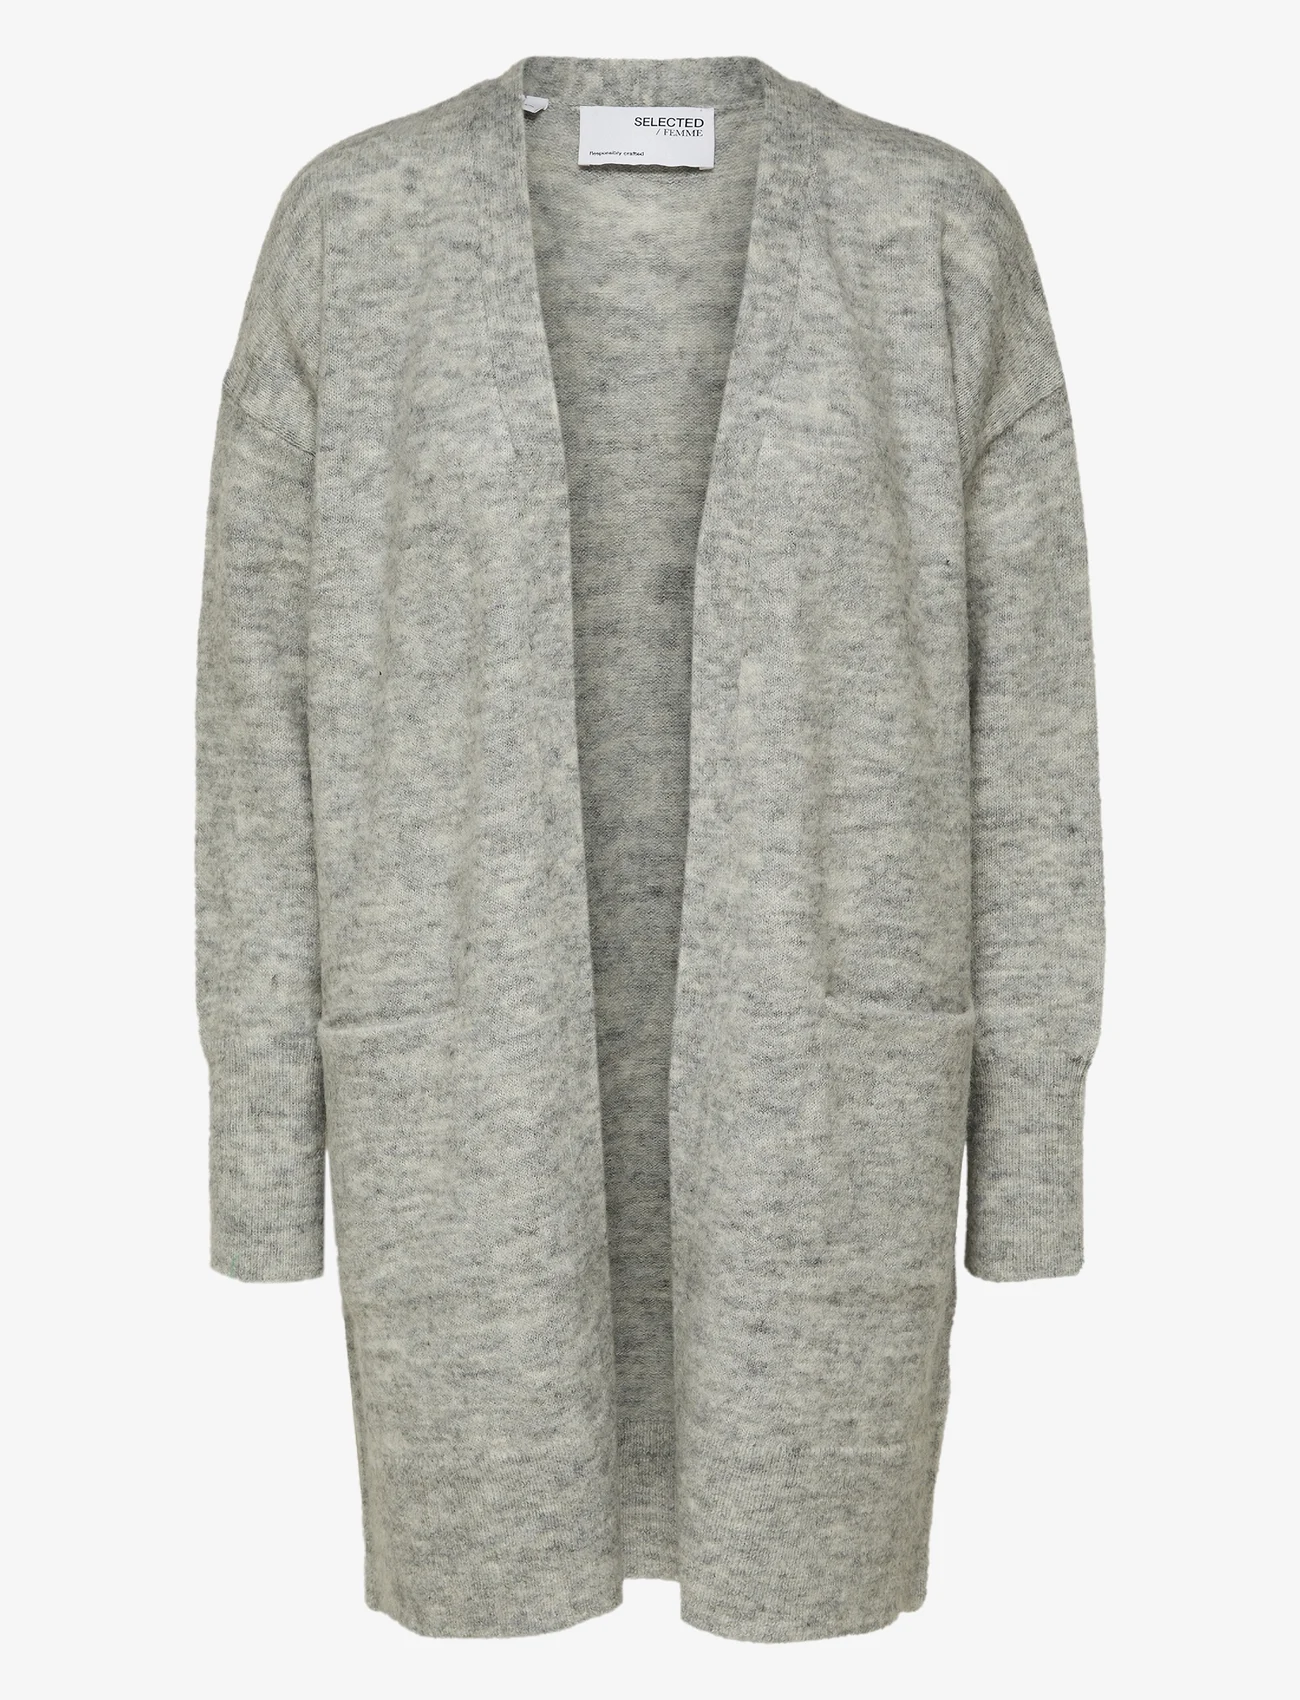 Selected Femme - SLFLULU NEW LS KNIT LONG CARDIGAN B NOOS - cardigans - light grey melange - 0